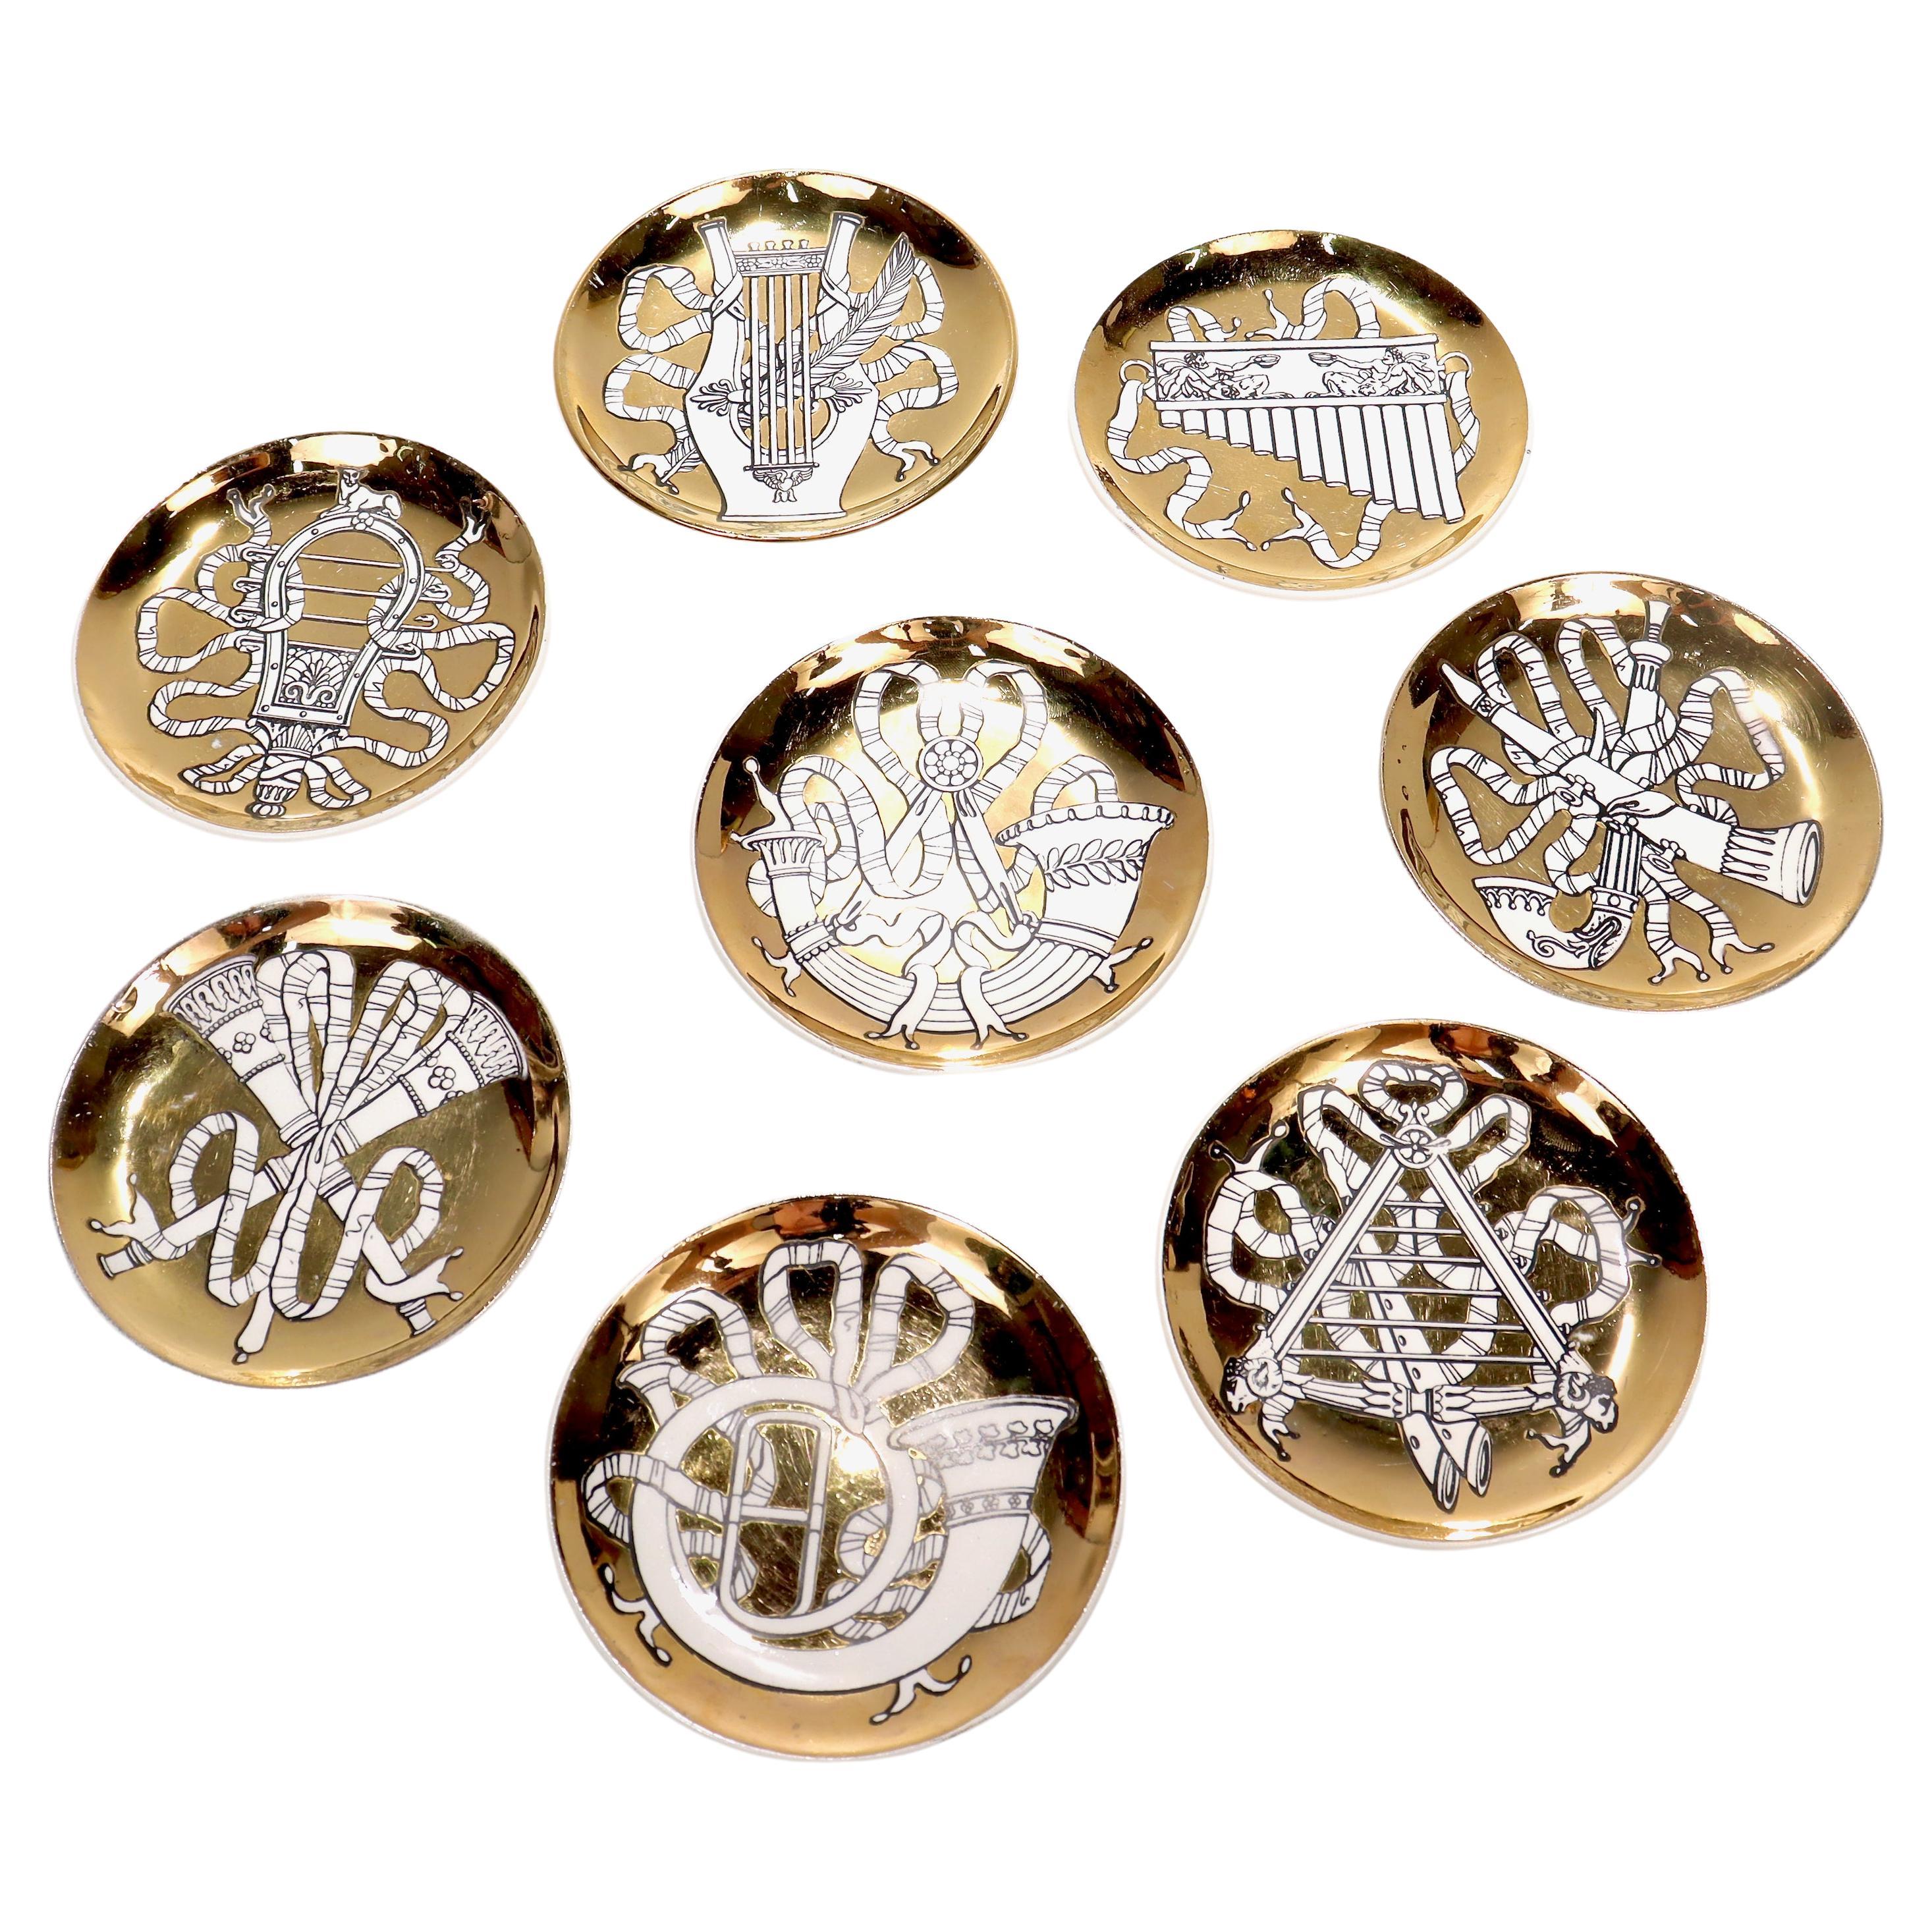 Complete Set of 8 Fornasetti "Musicalia" Ceramic Coasters or Trivets